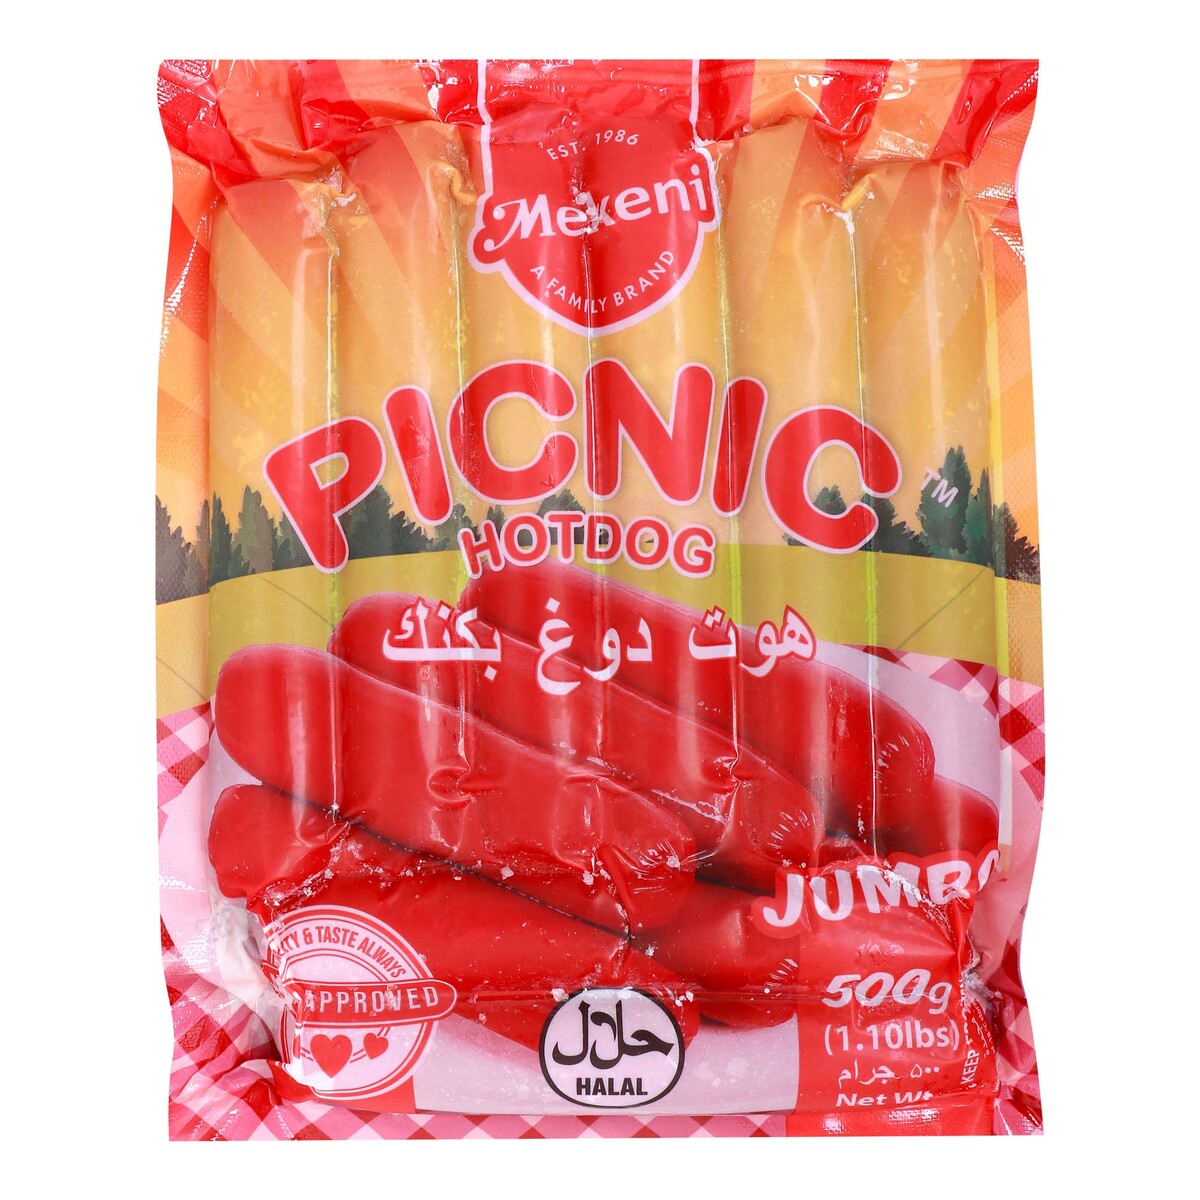 Mekeni Picnic Hotdog Jumbo 500 g